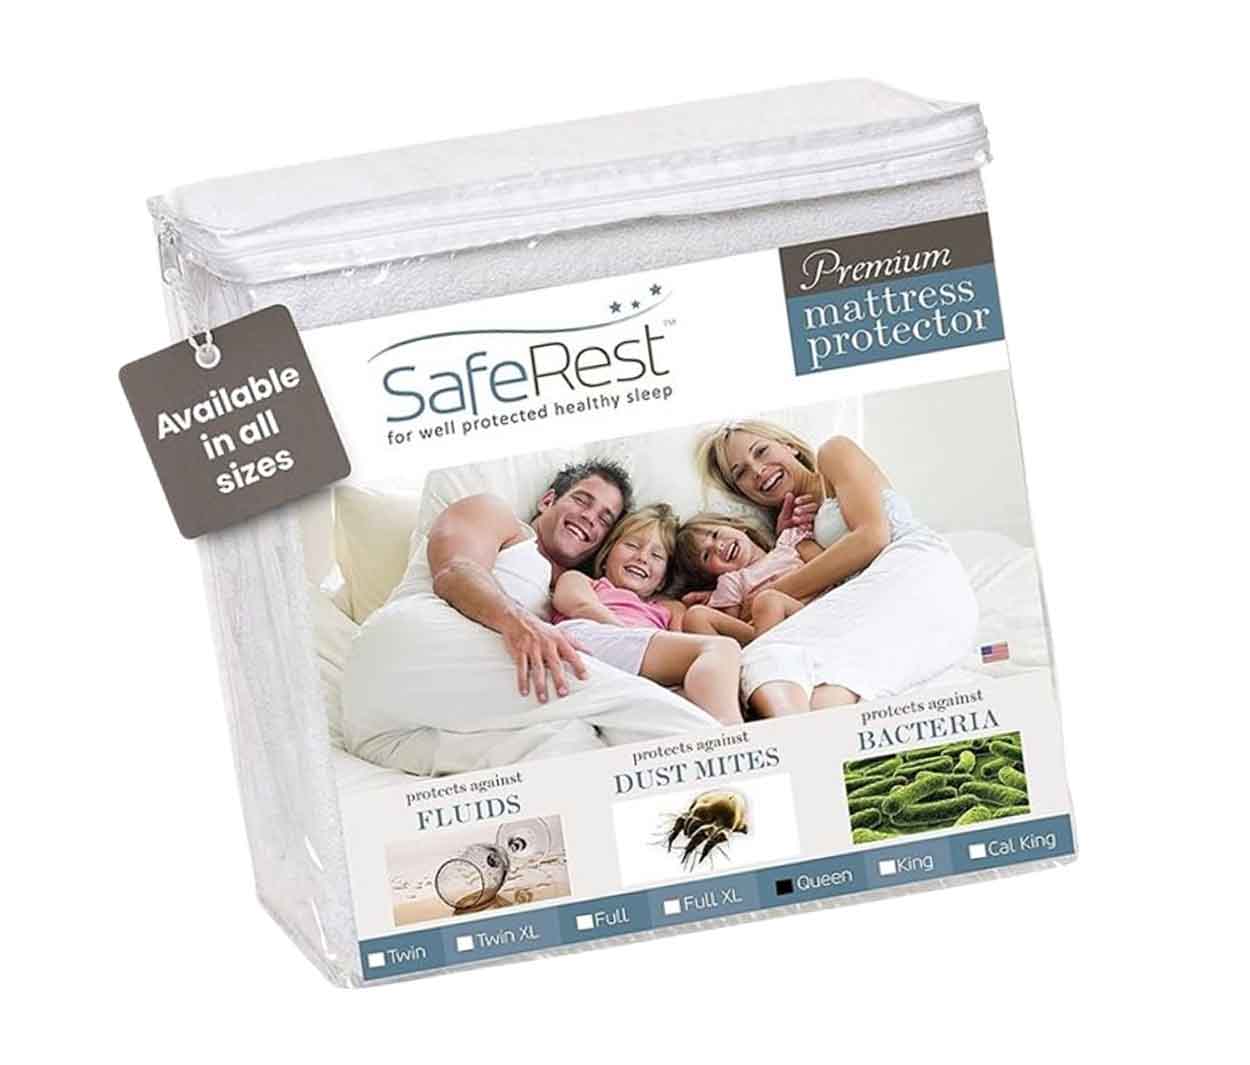 Happy family enjoying a comfortable sleep with premium mattress protector